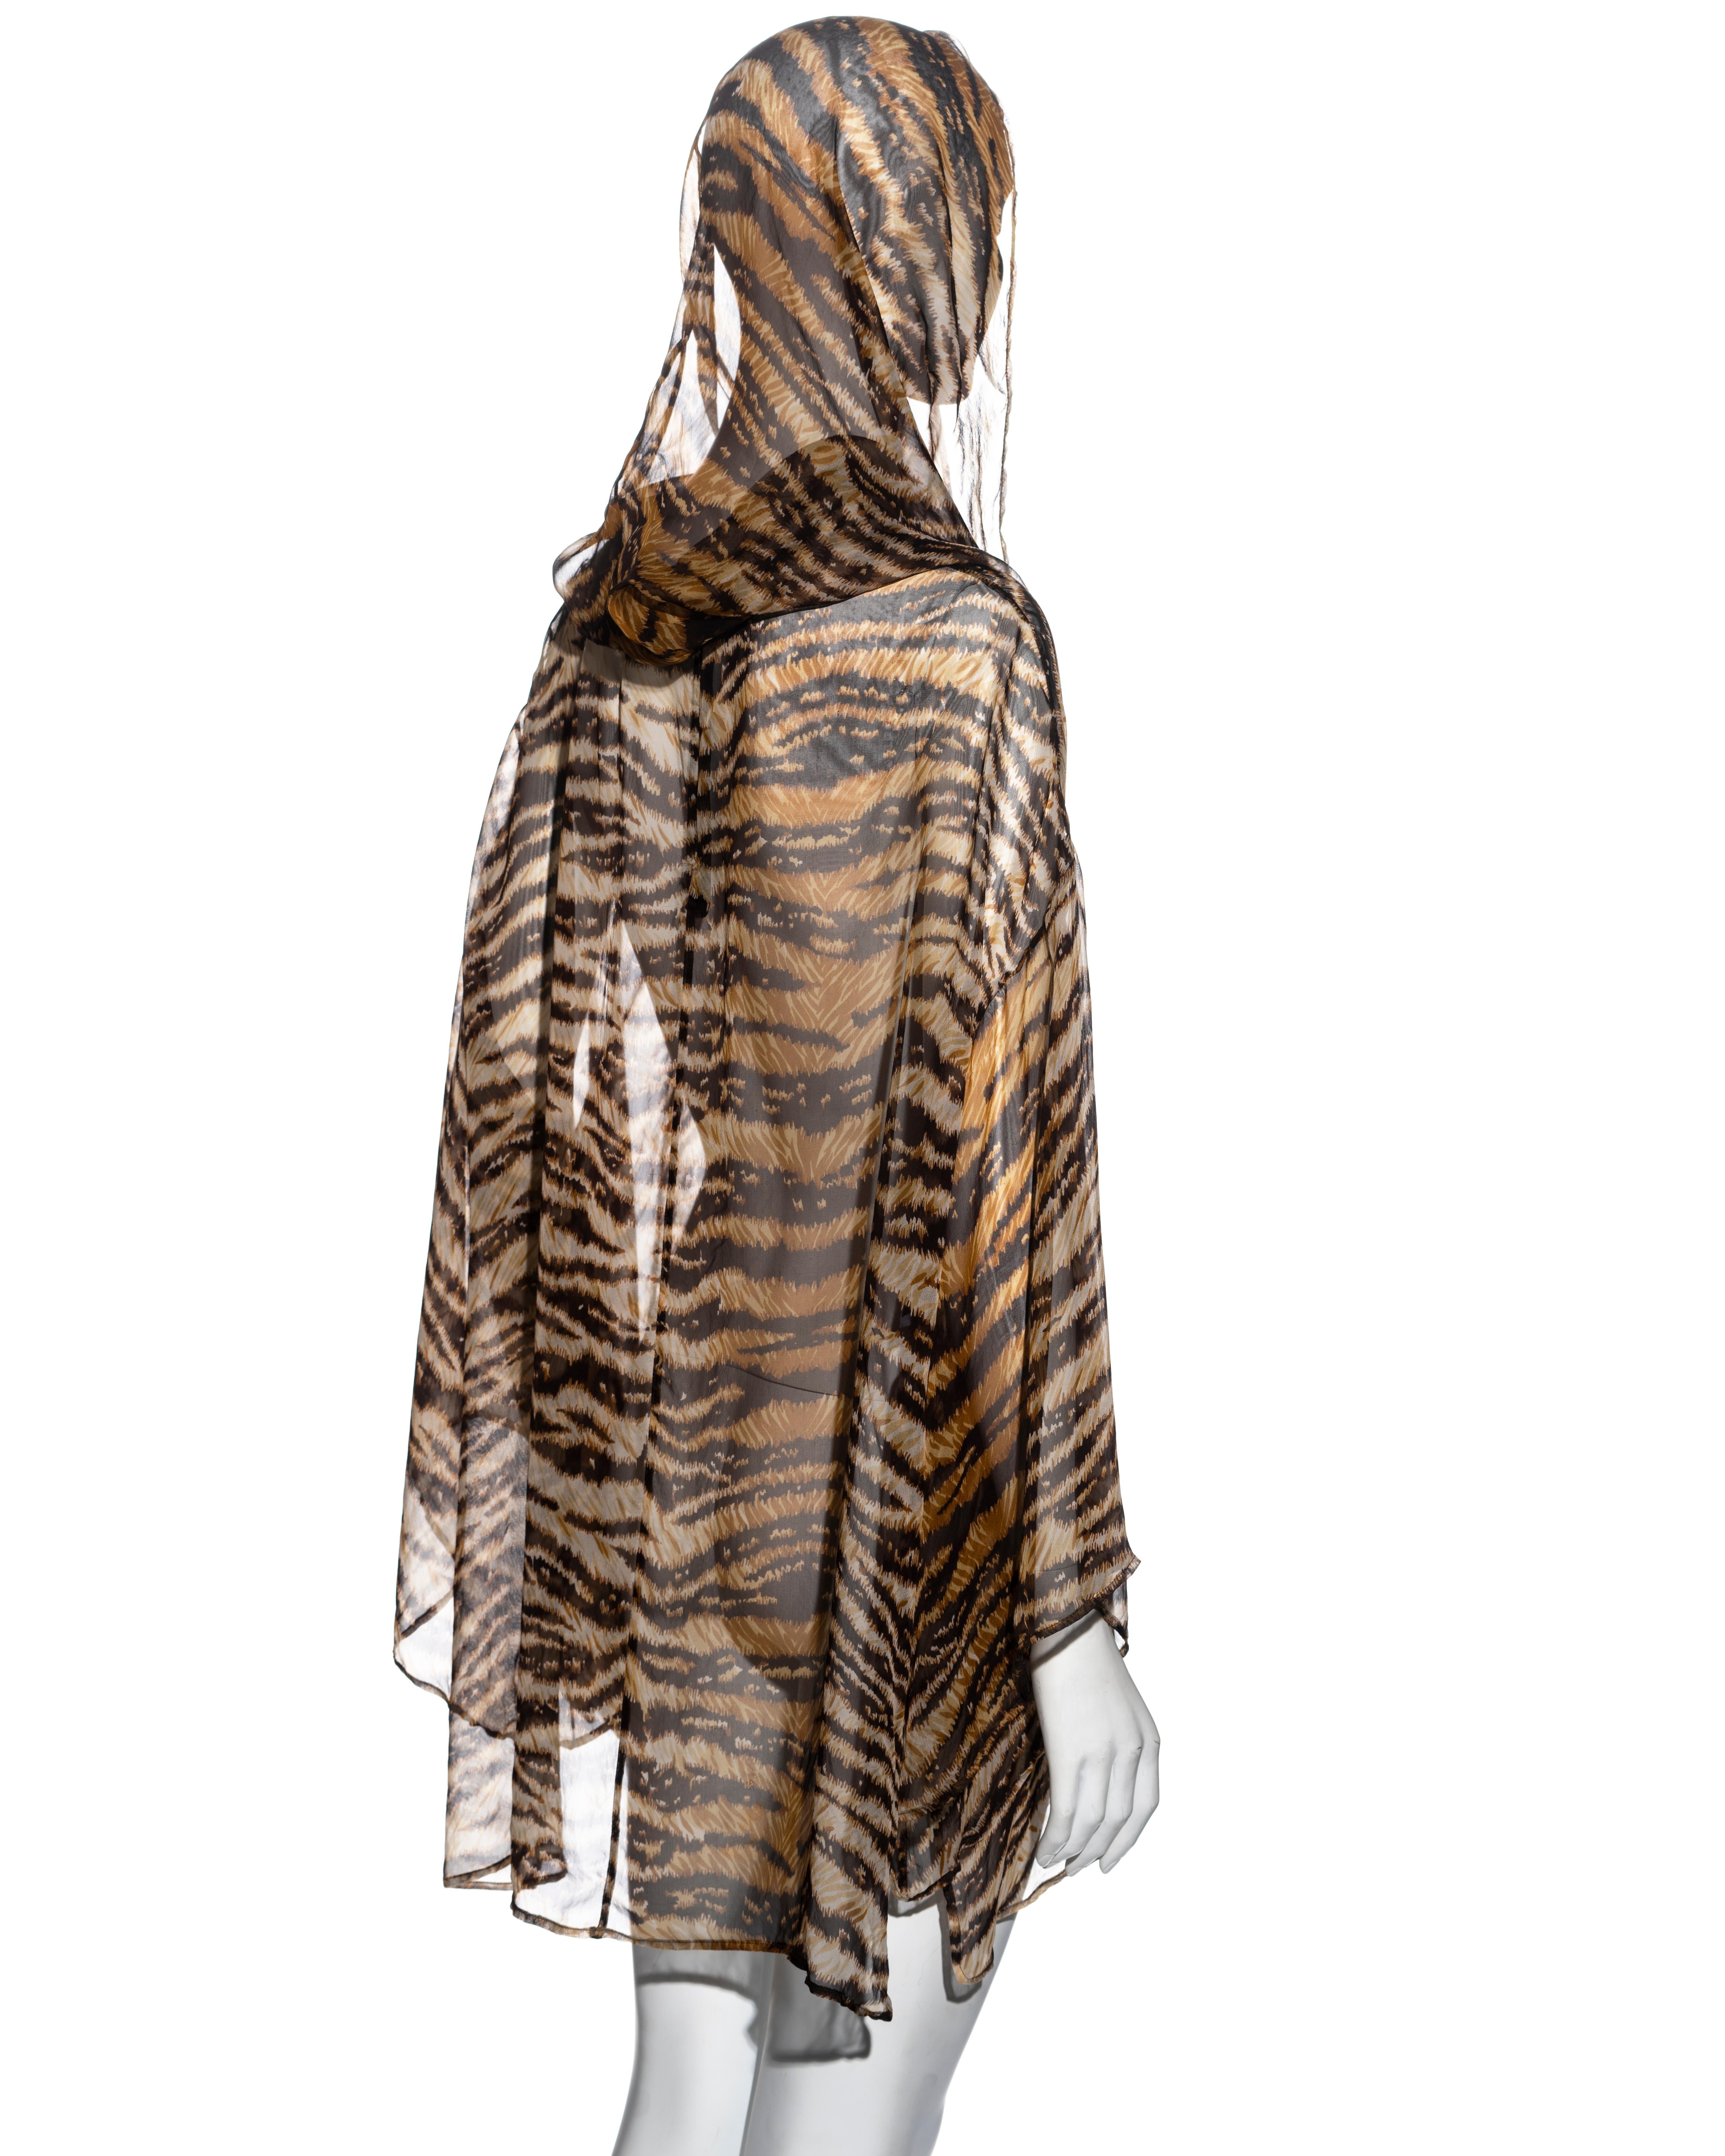 Dolce & Gabbana tiger print silk chiffon hooded tunic dress, ss 1996 2